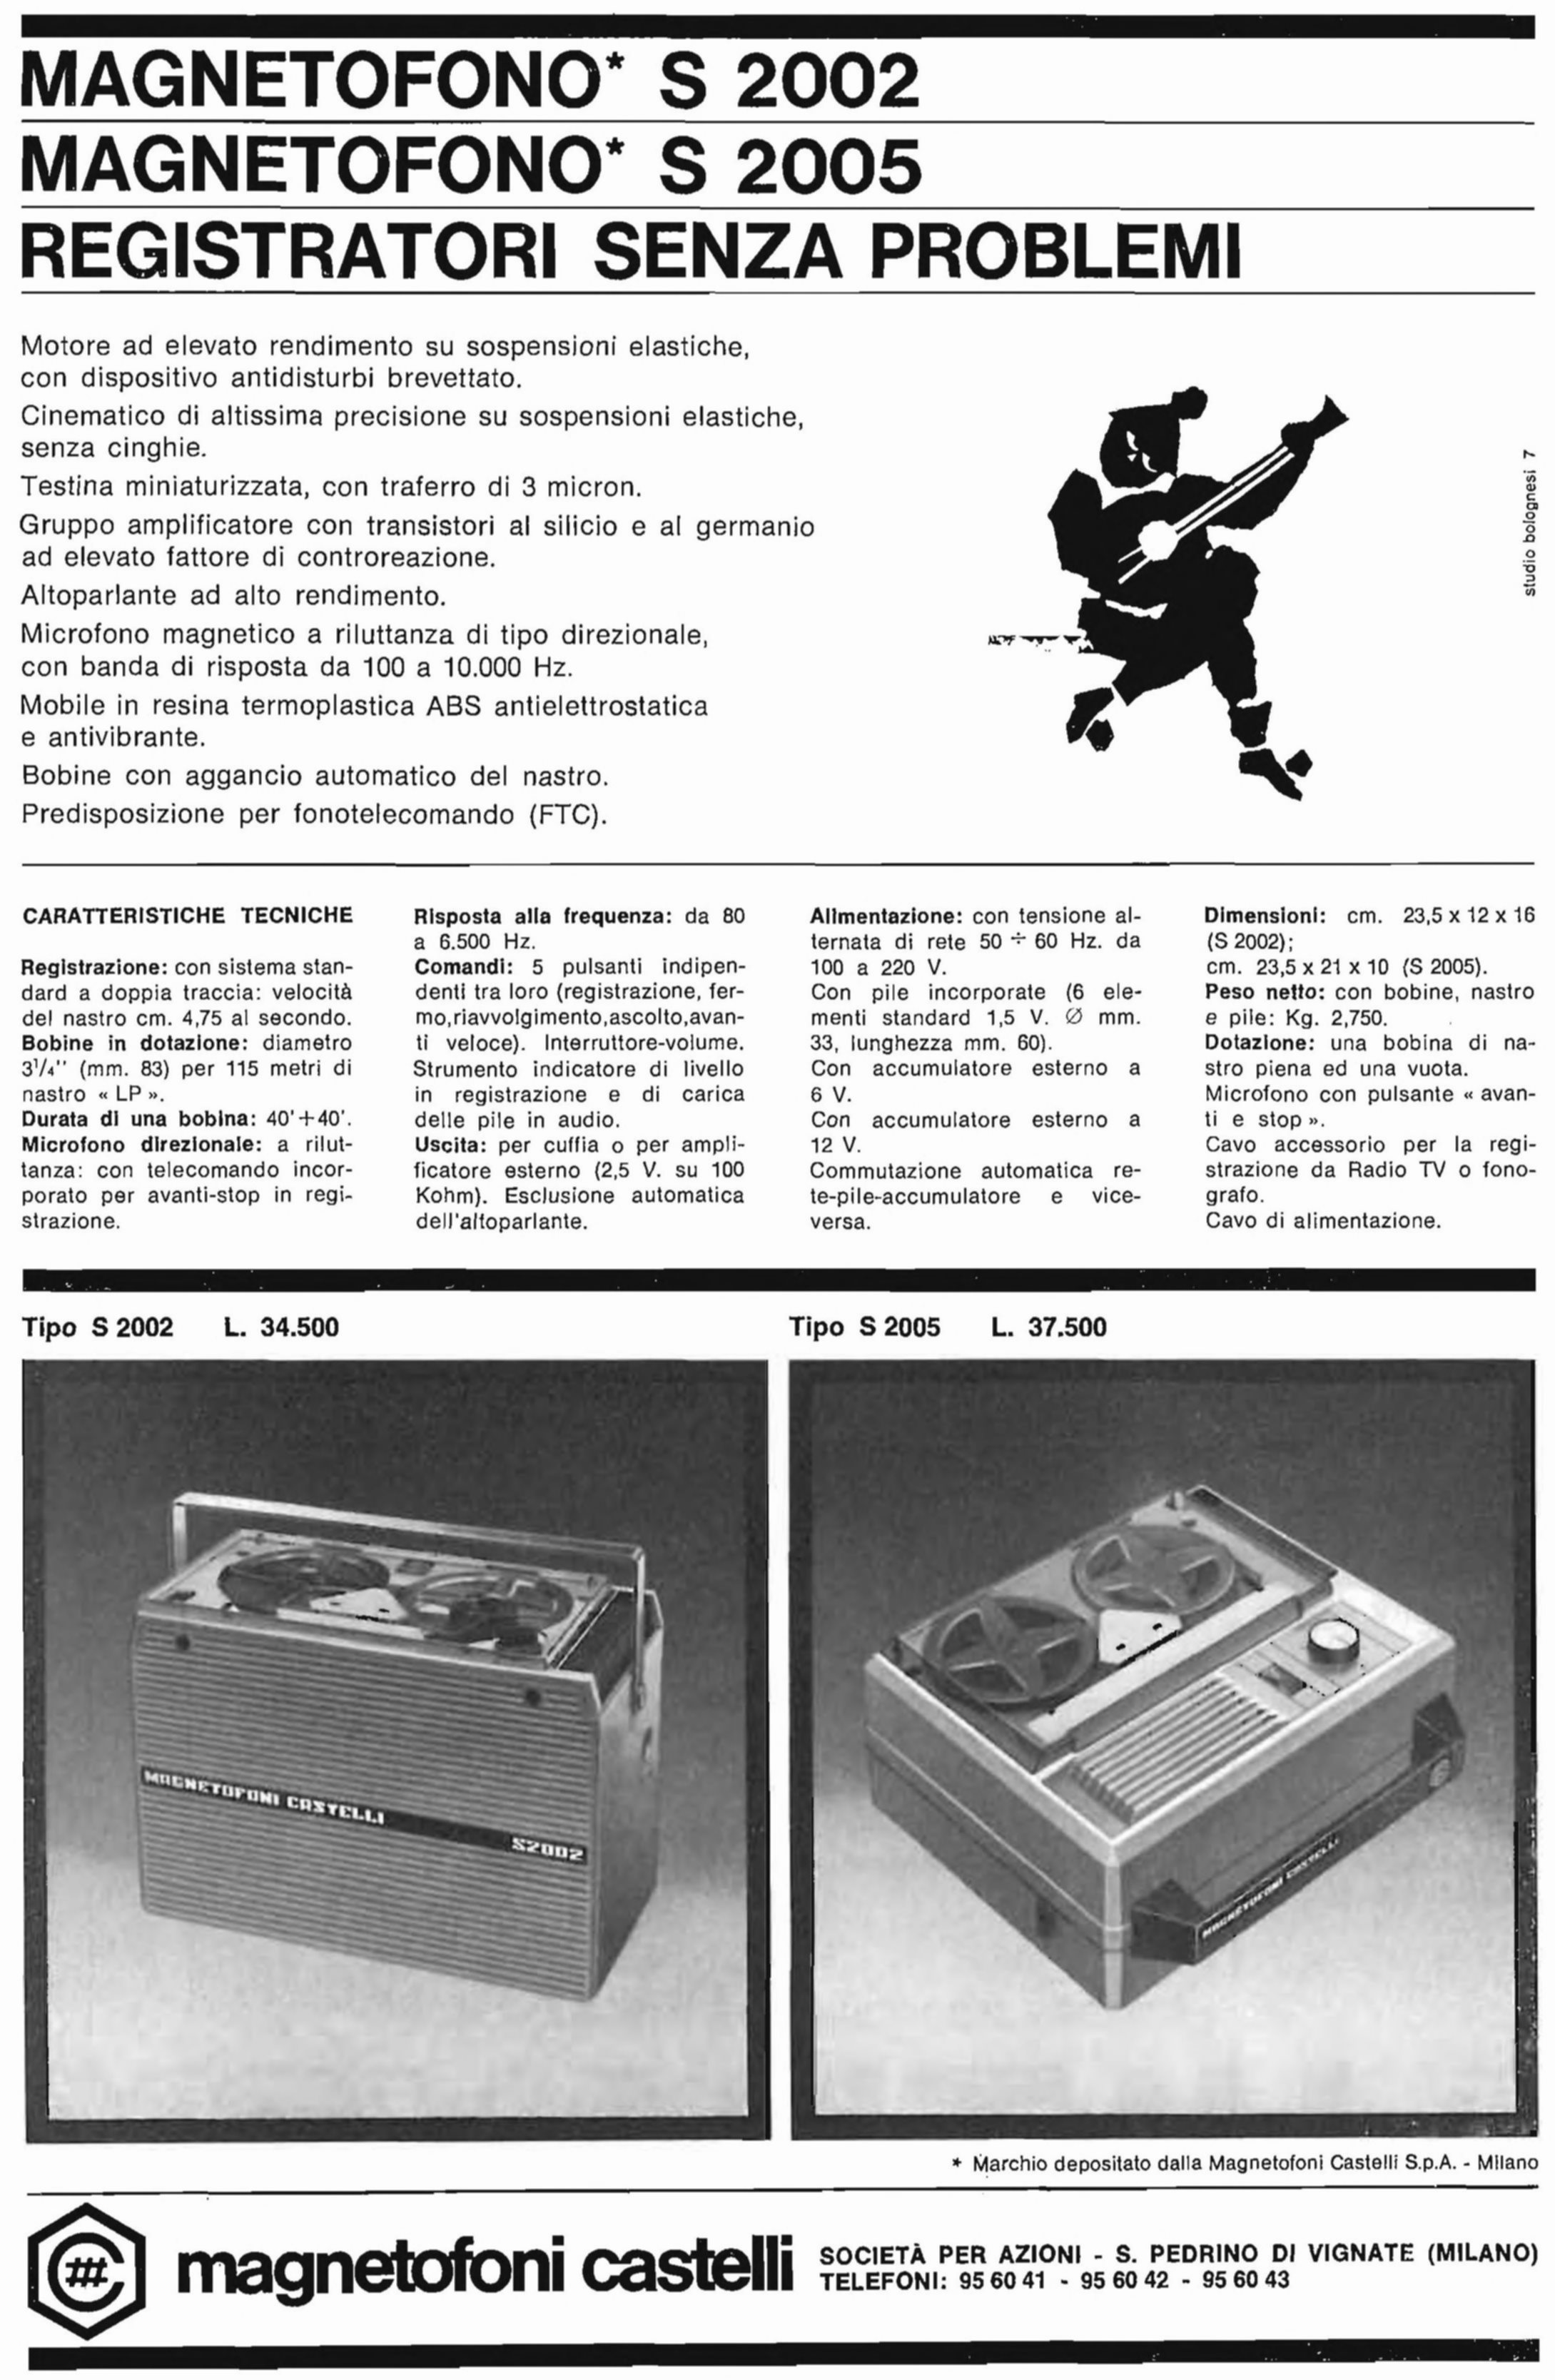 Magnetofoni Catelli 1966 408.jpg